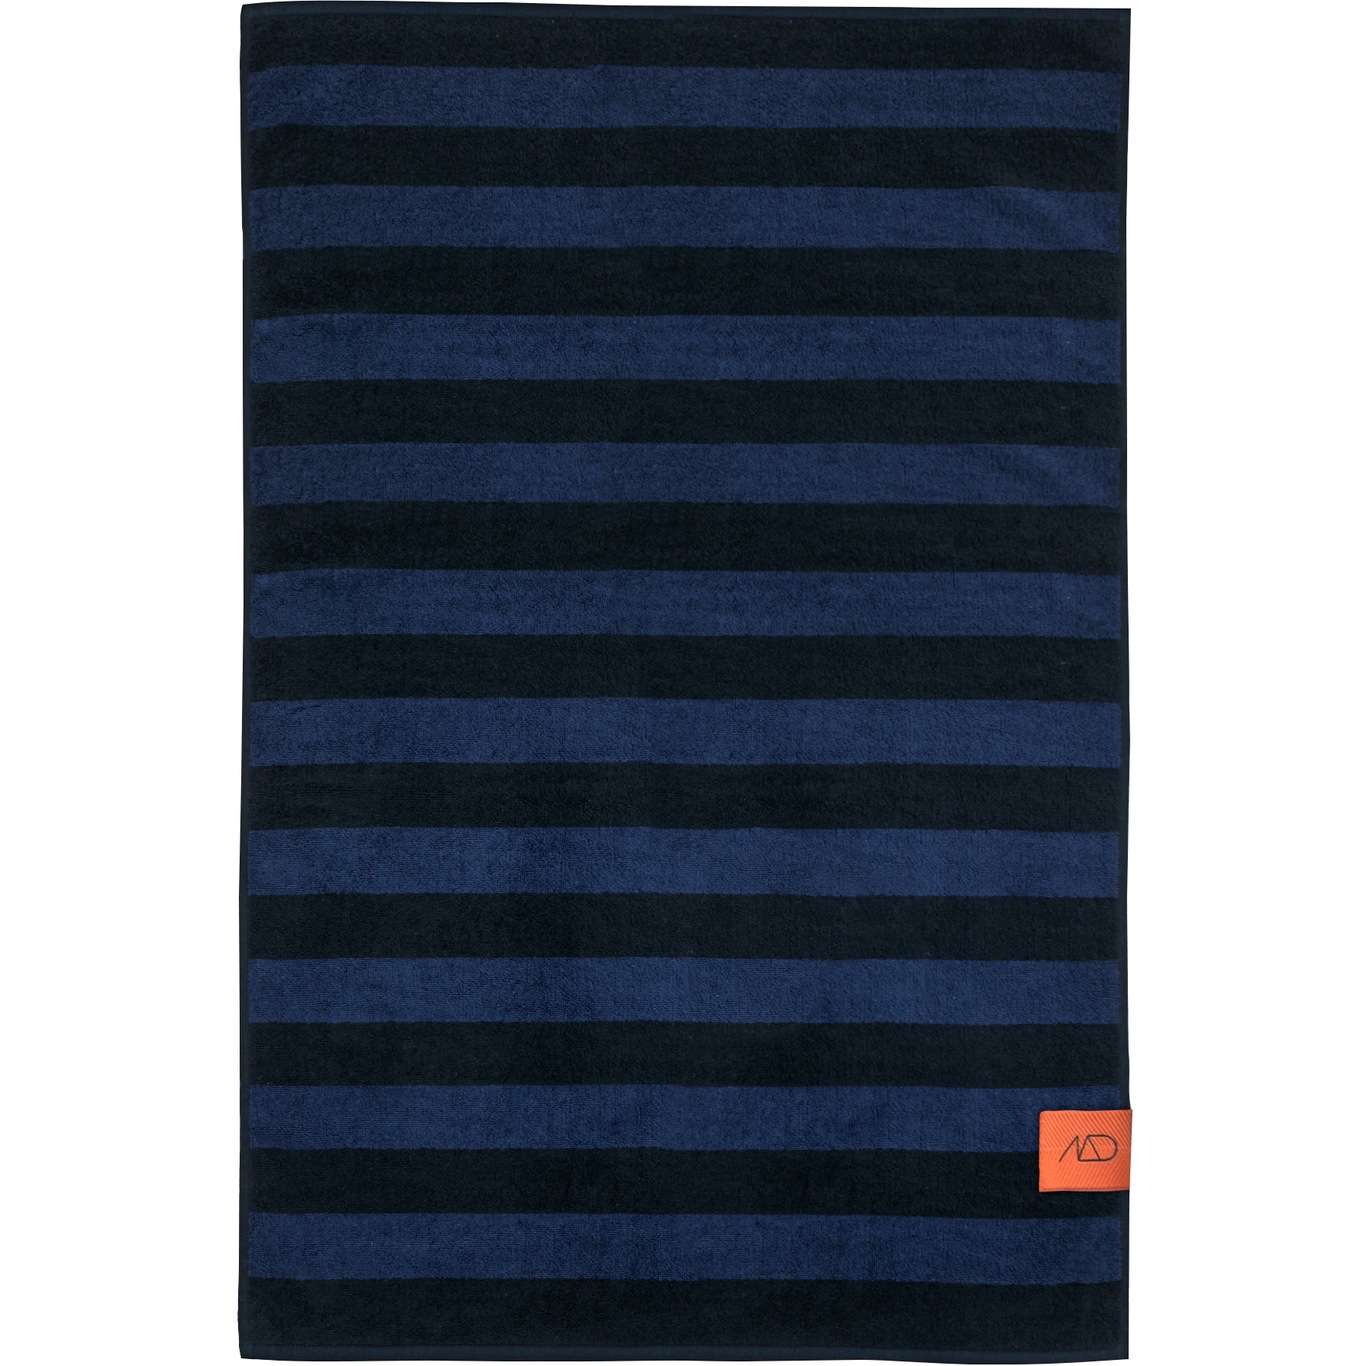 Aros Håndkle Midnight Blue 2-pk, 35x55 cm